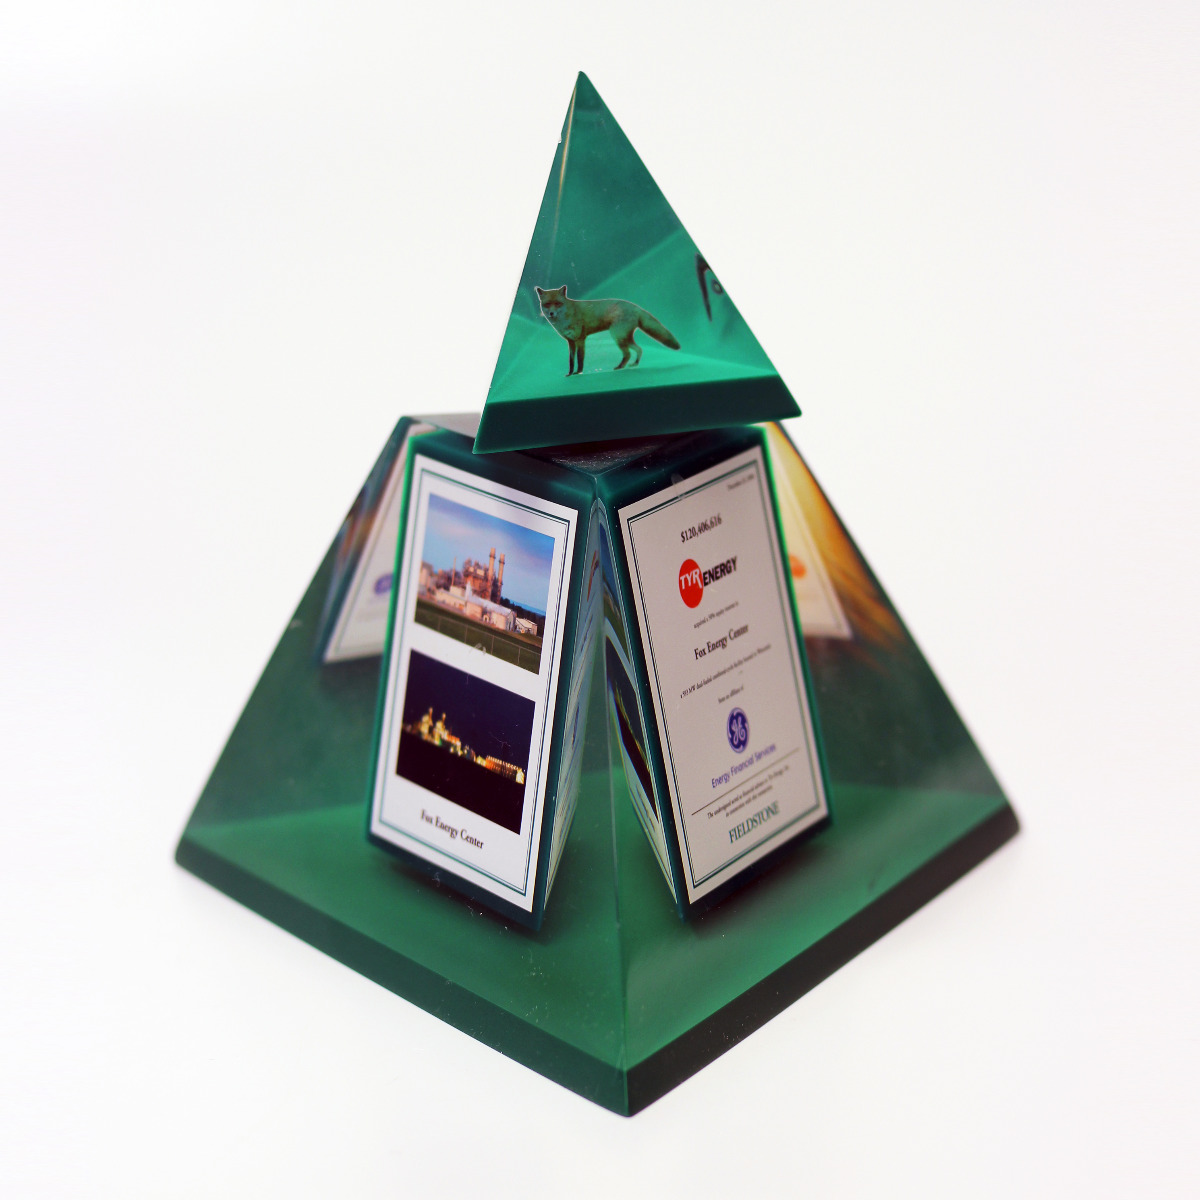 Custom Lucite pyramid shaped bespoke award gift with moving pyramid